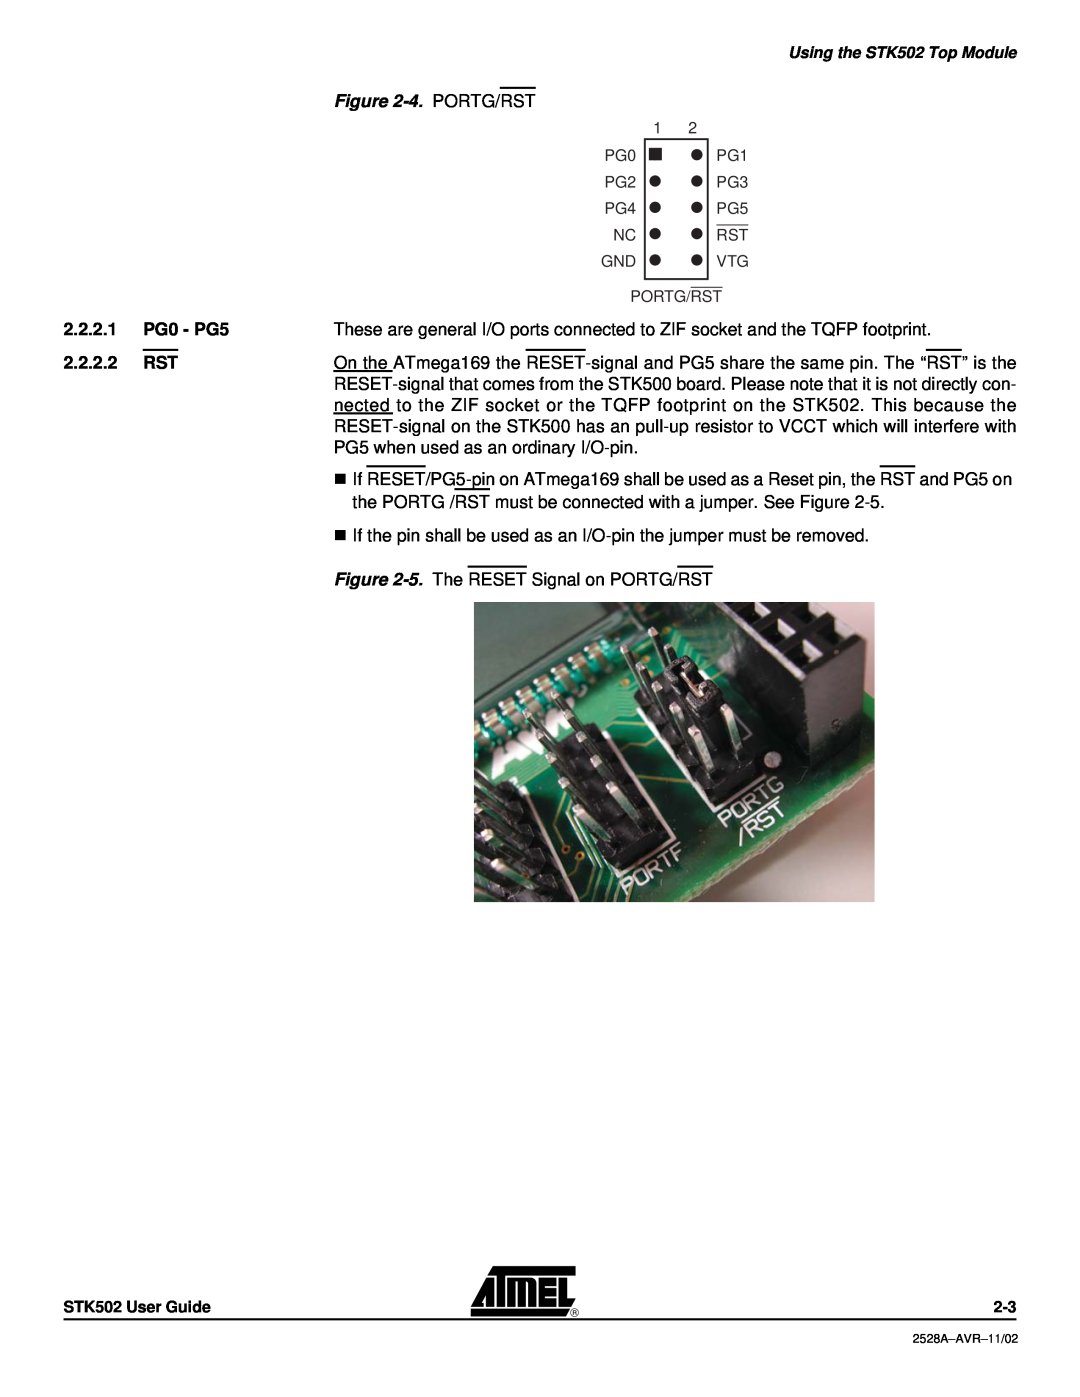 Atmel STK502 manual 4. PORTG/RST, 2.2.2.1, PG0 - PG5, 2.2.2.2 